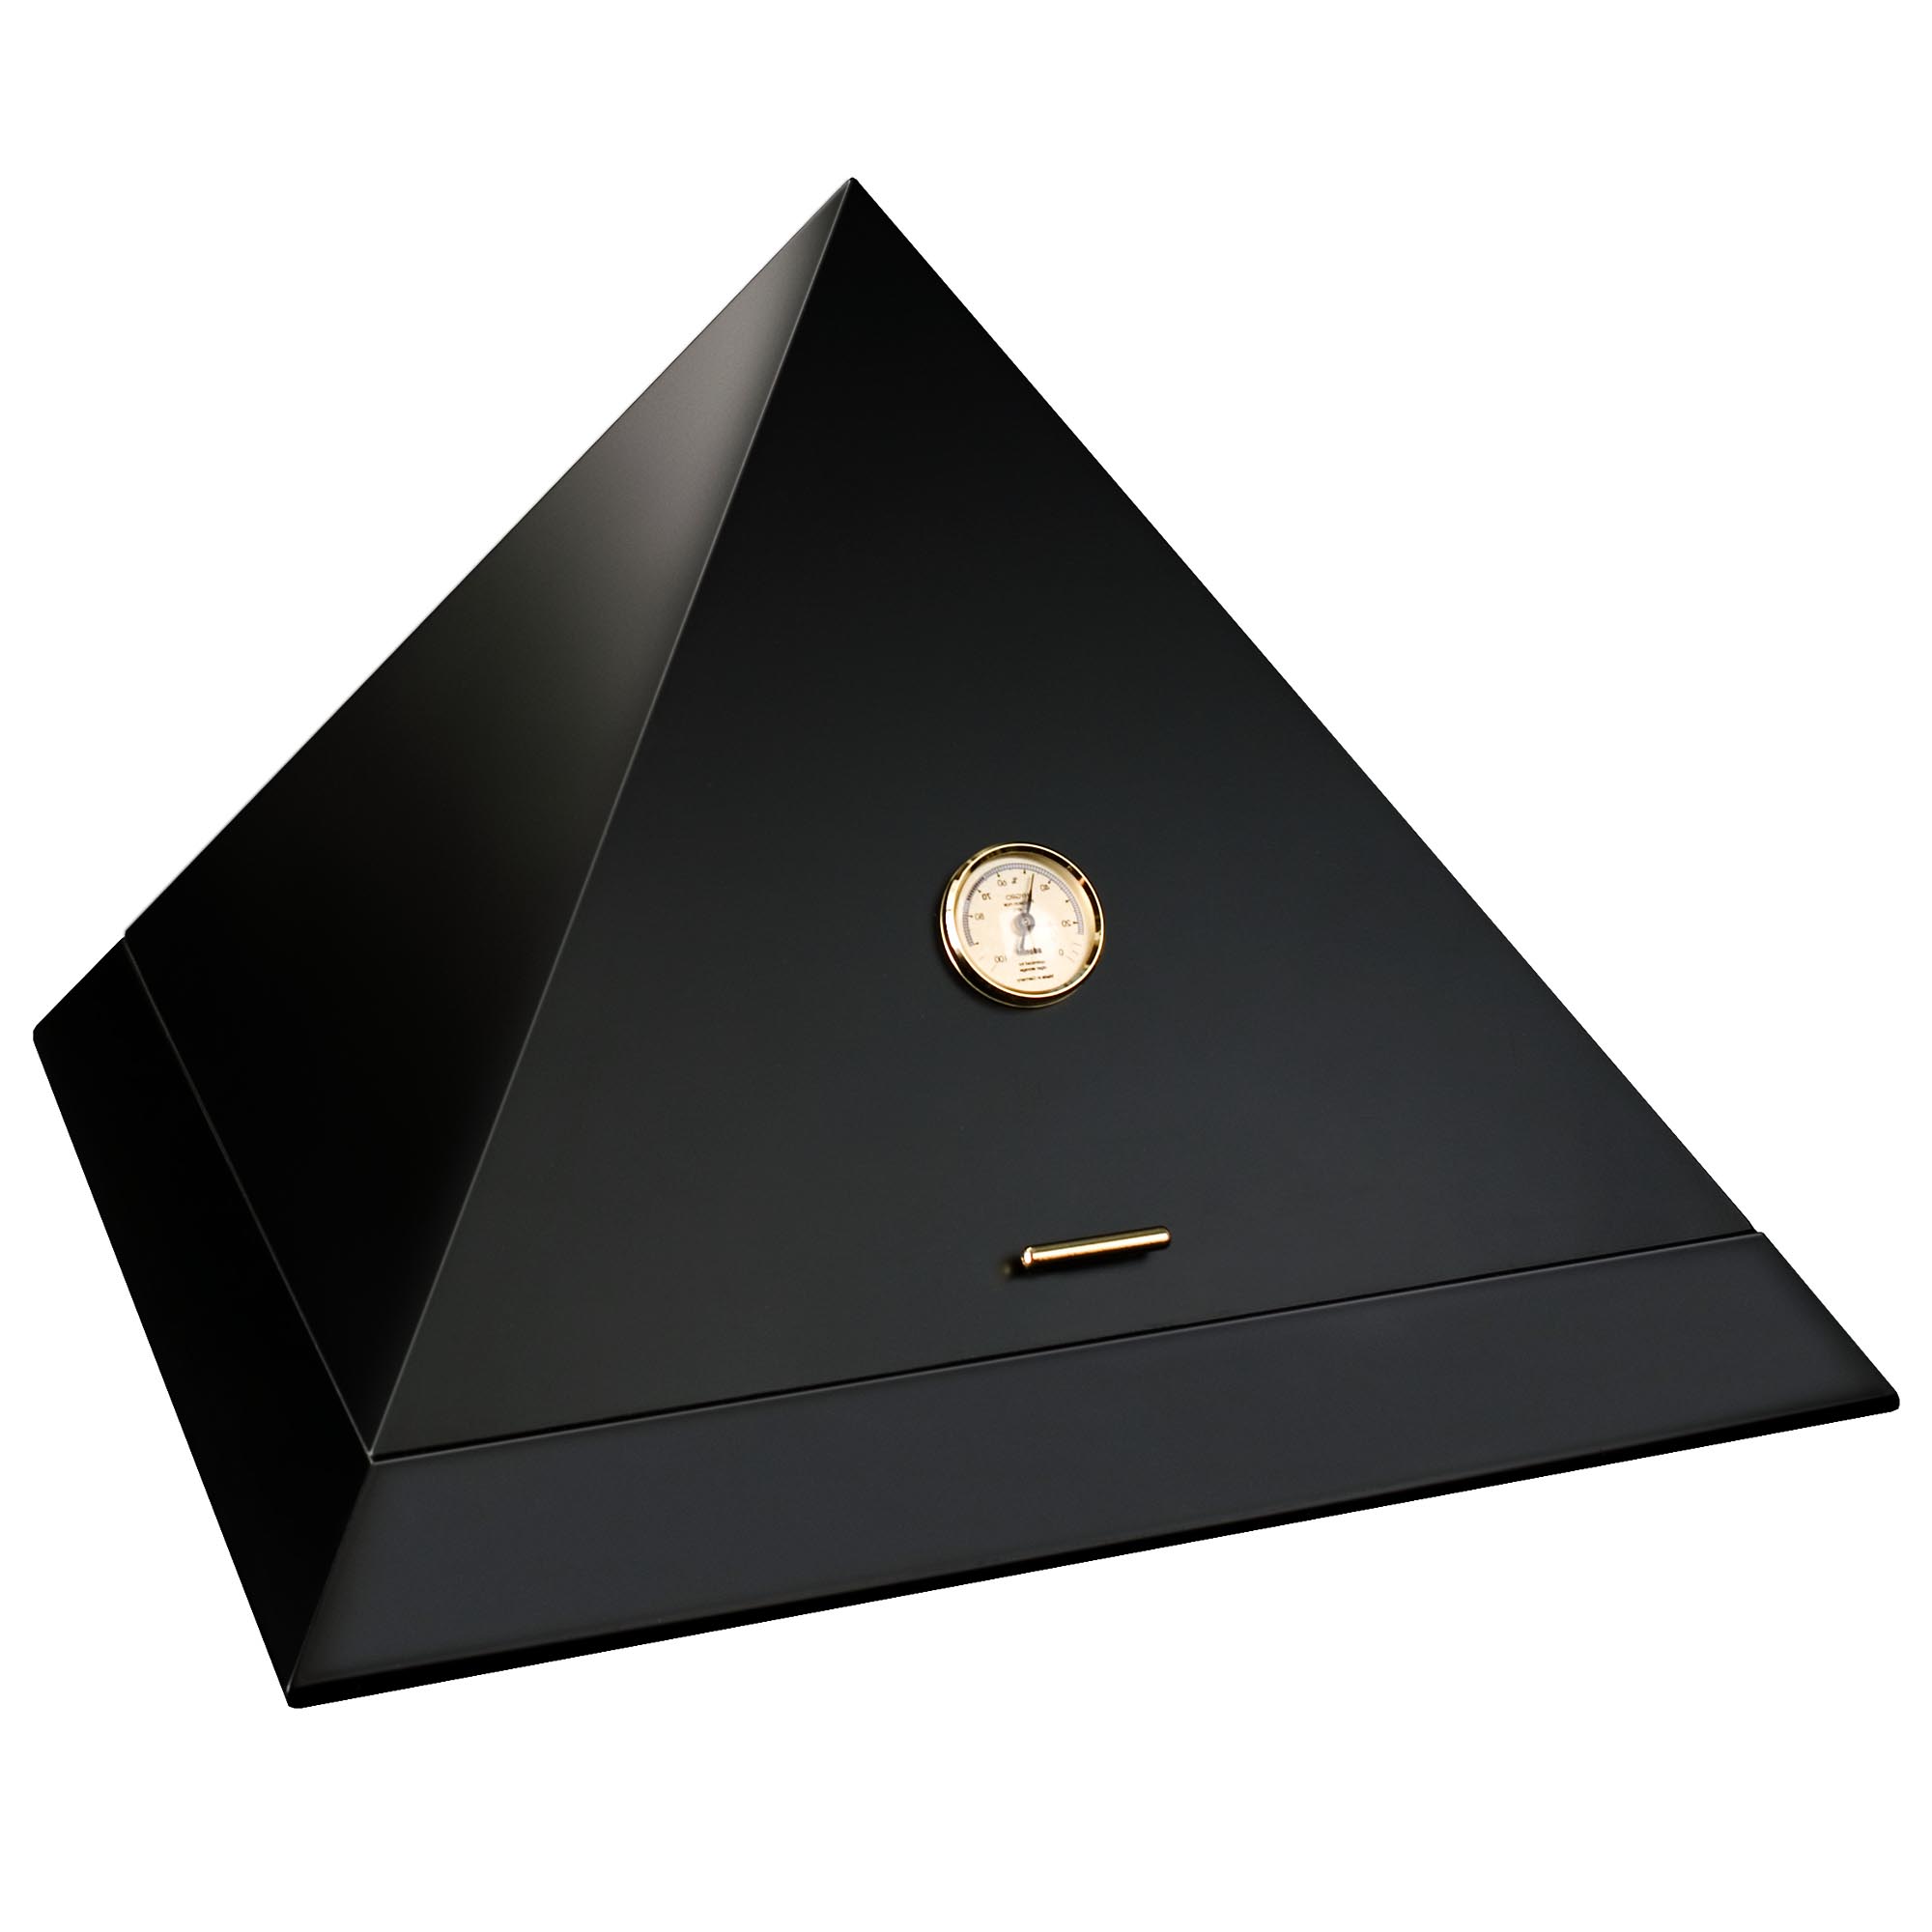 Adorini Humidor Pyramid Deluxe